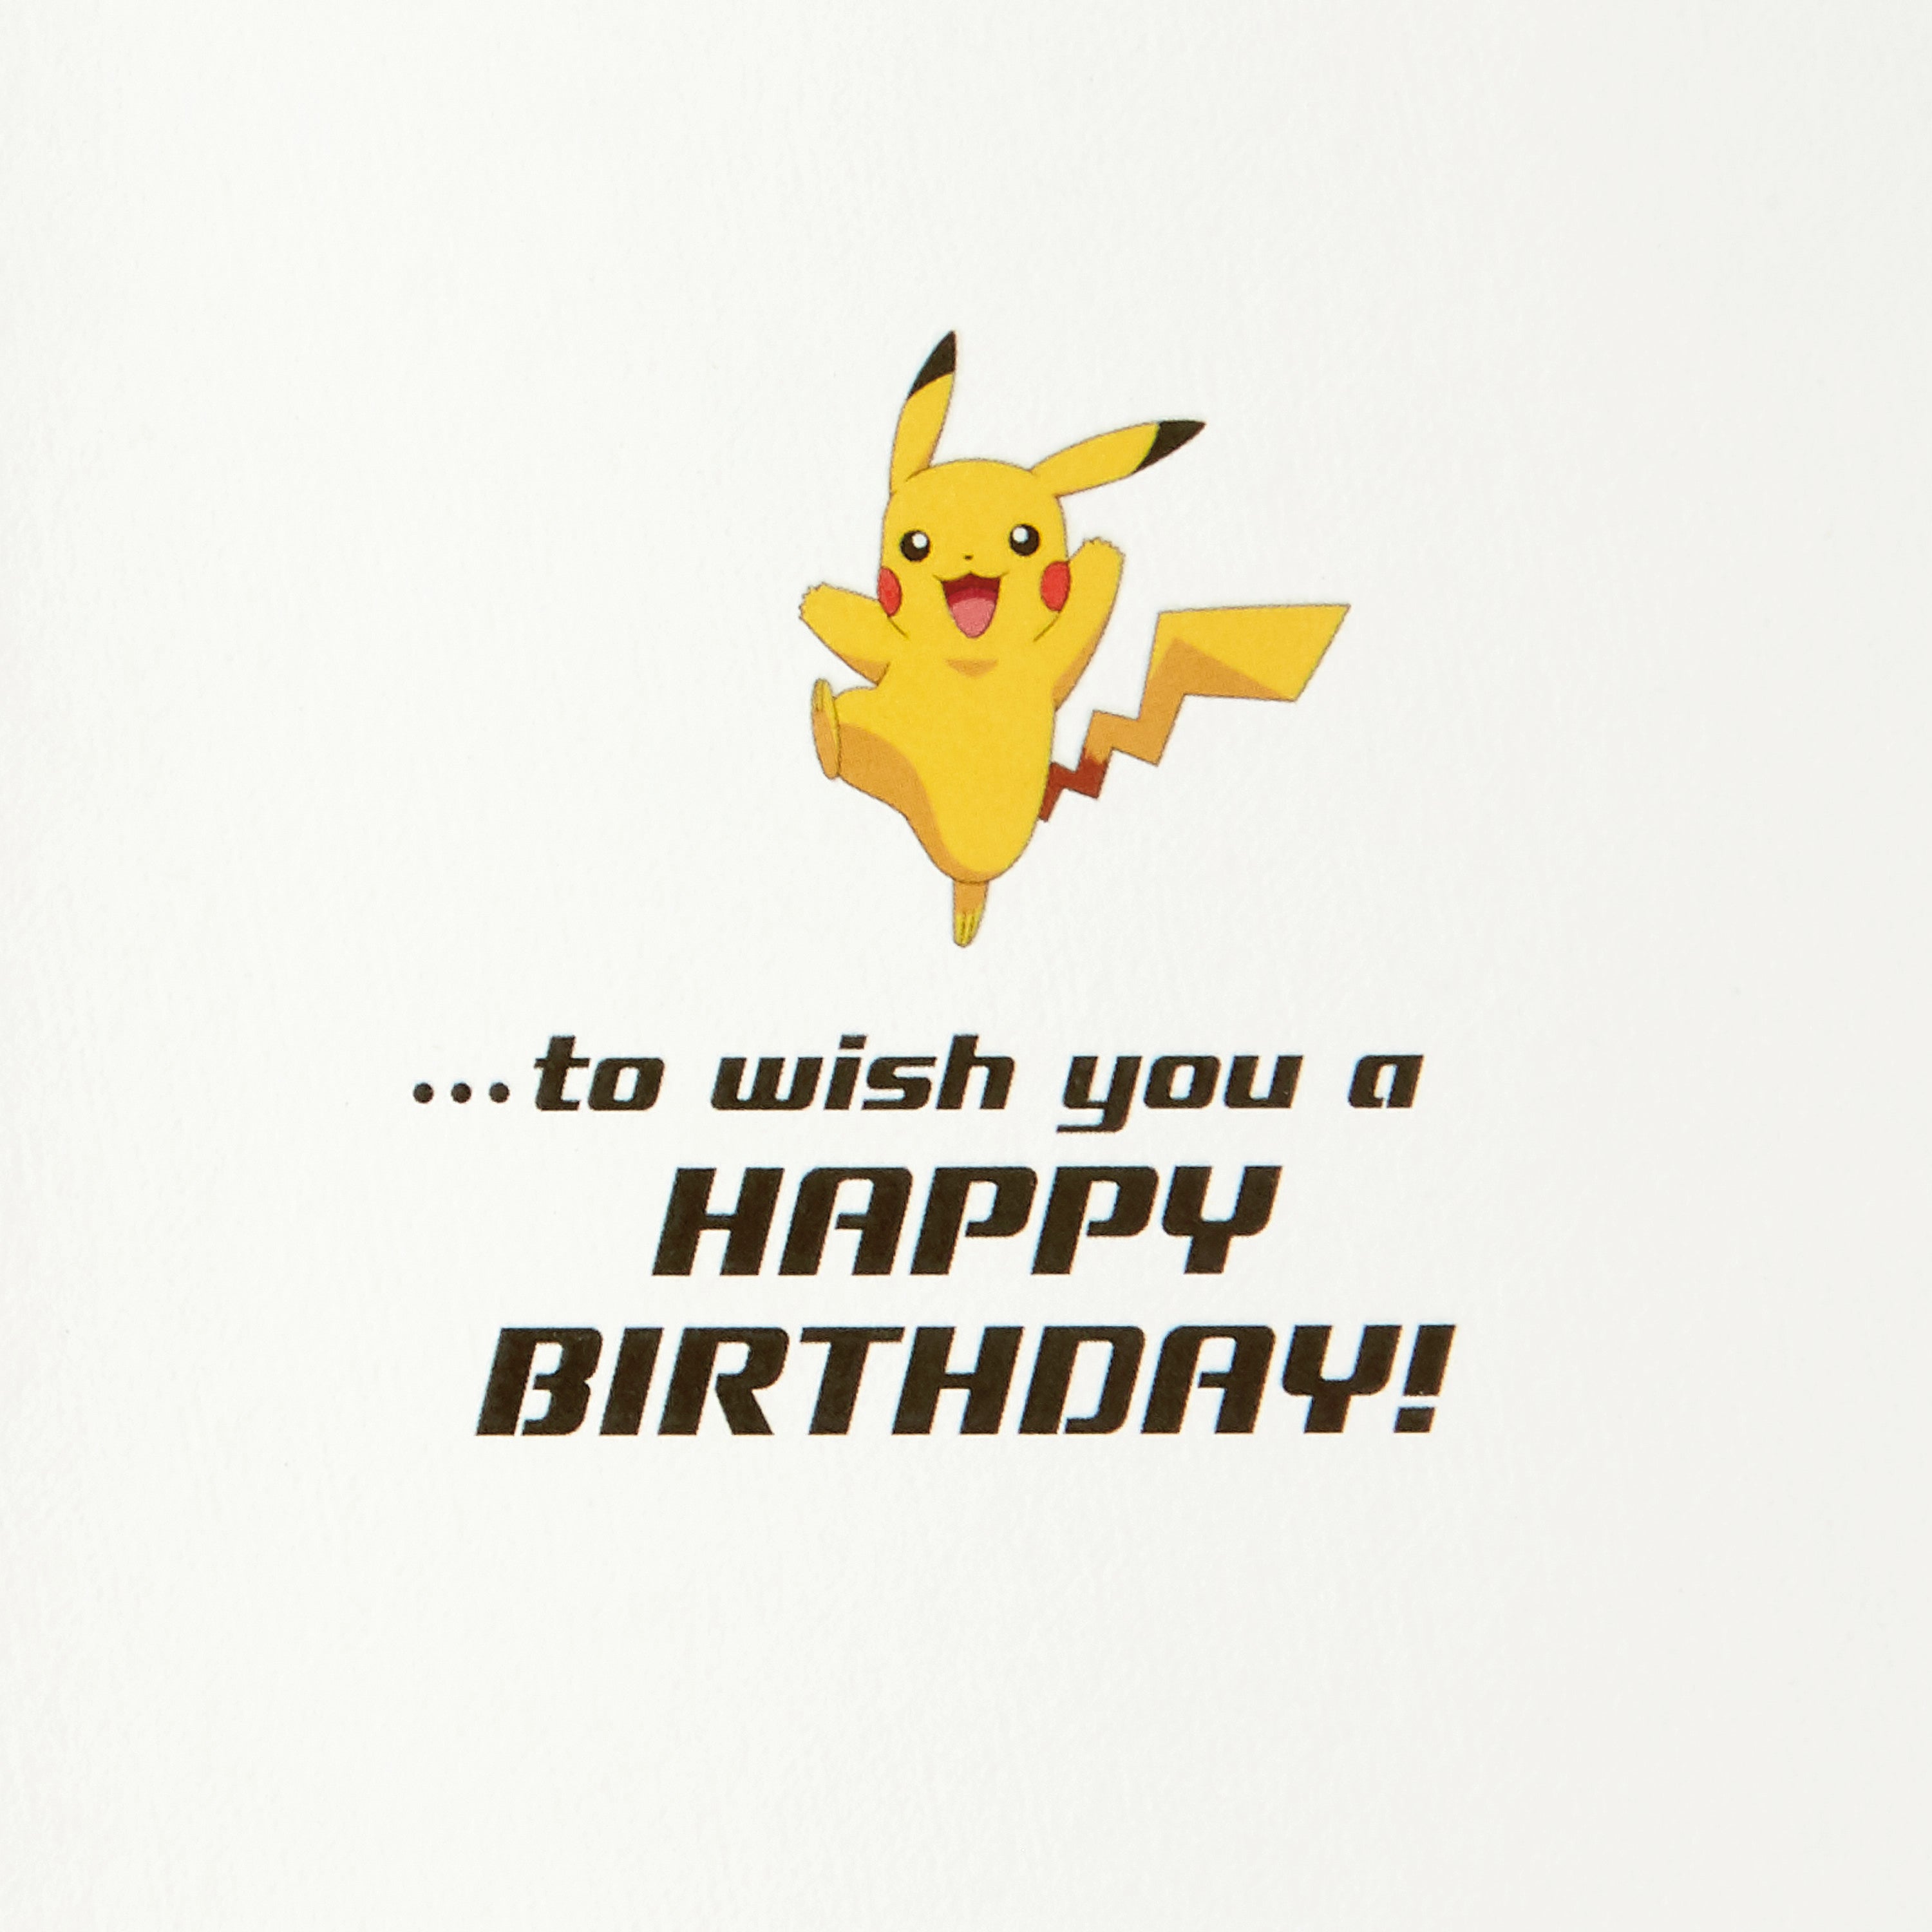 Pokémon Birthday Card (Wild Pikachu)